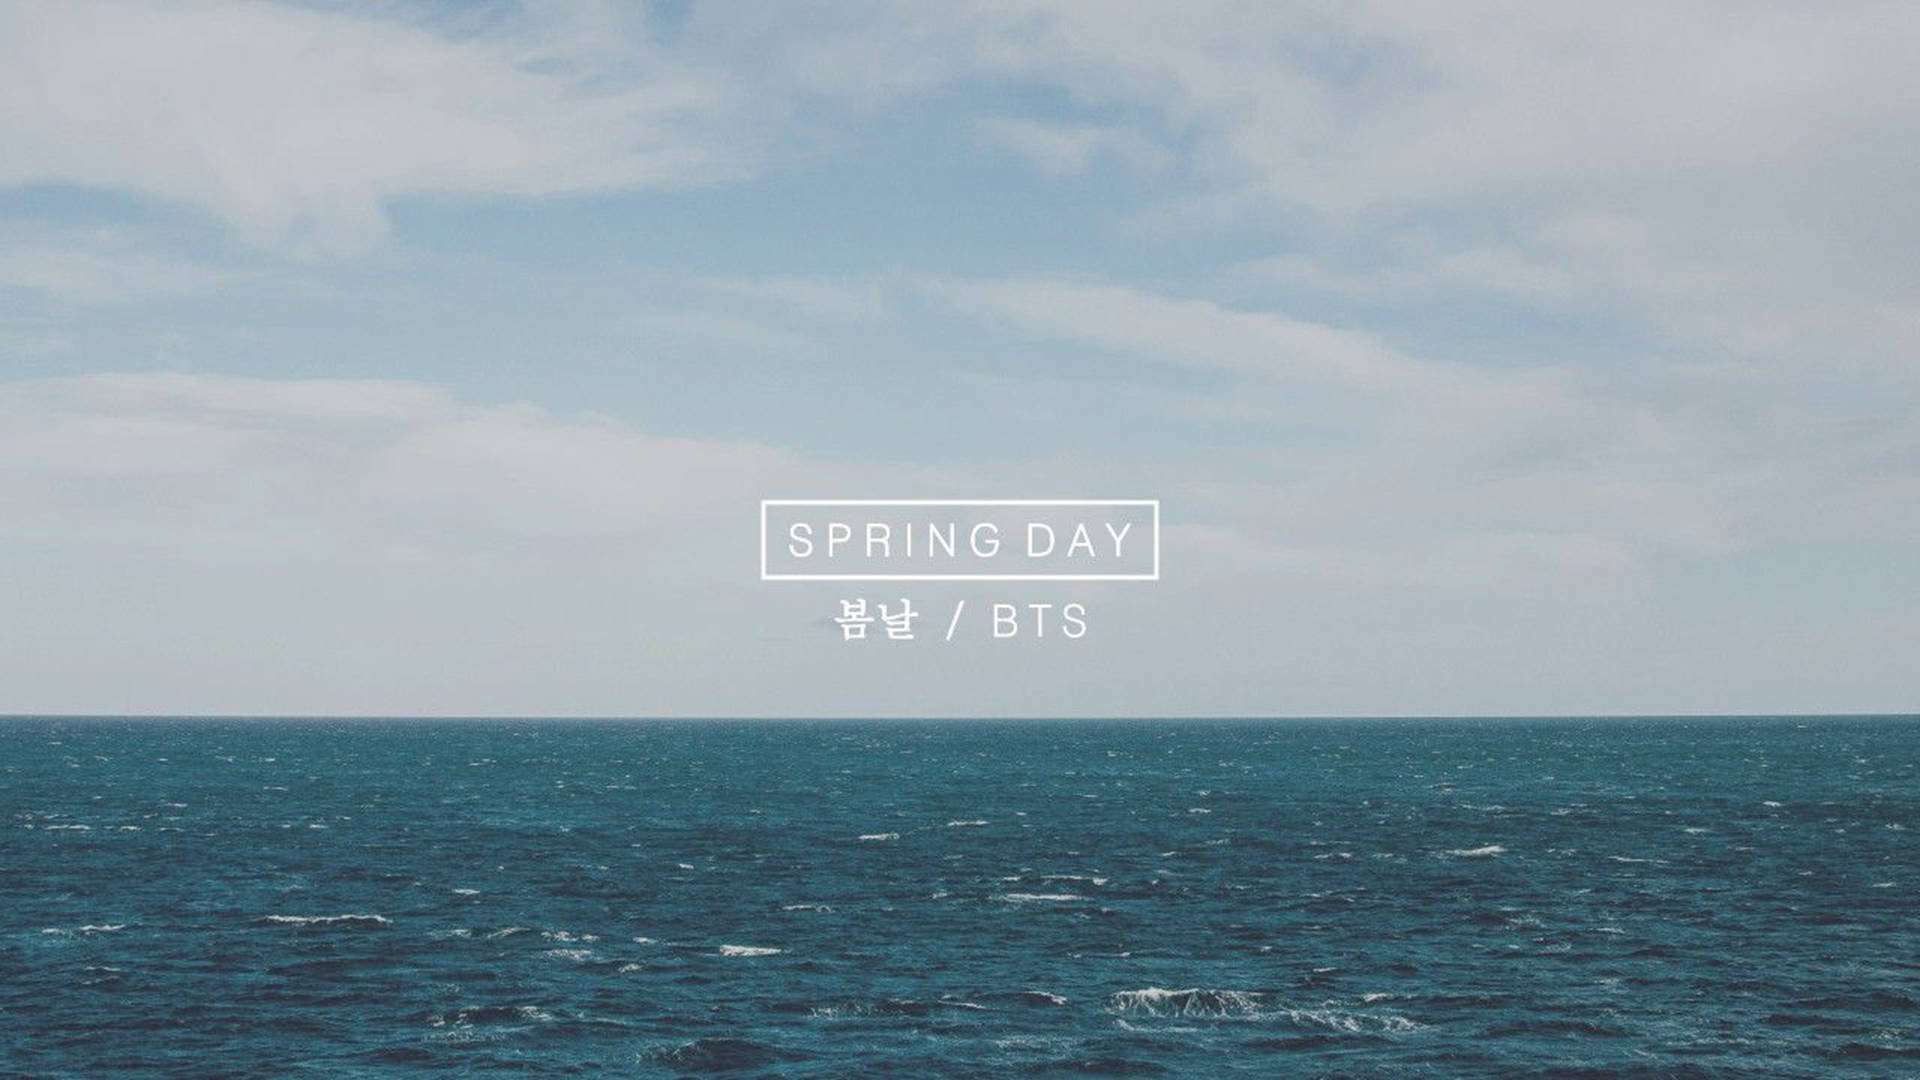 Download Bts Spring Day At Sea Laptop Wallpaper 